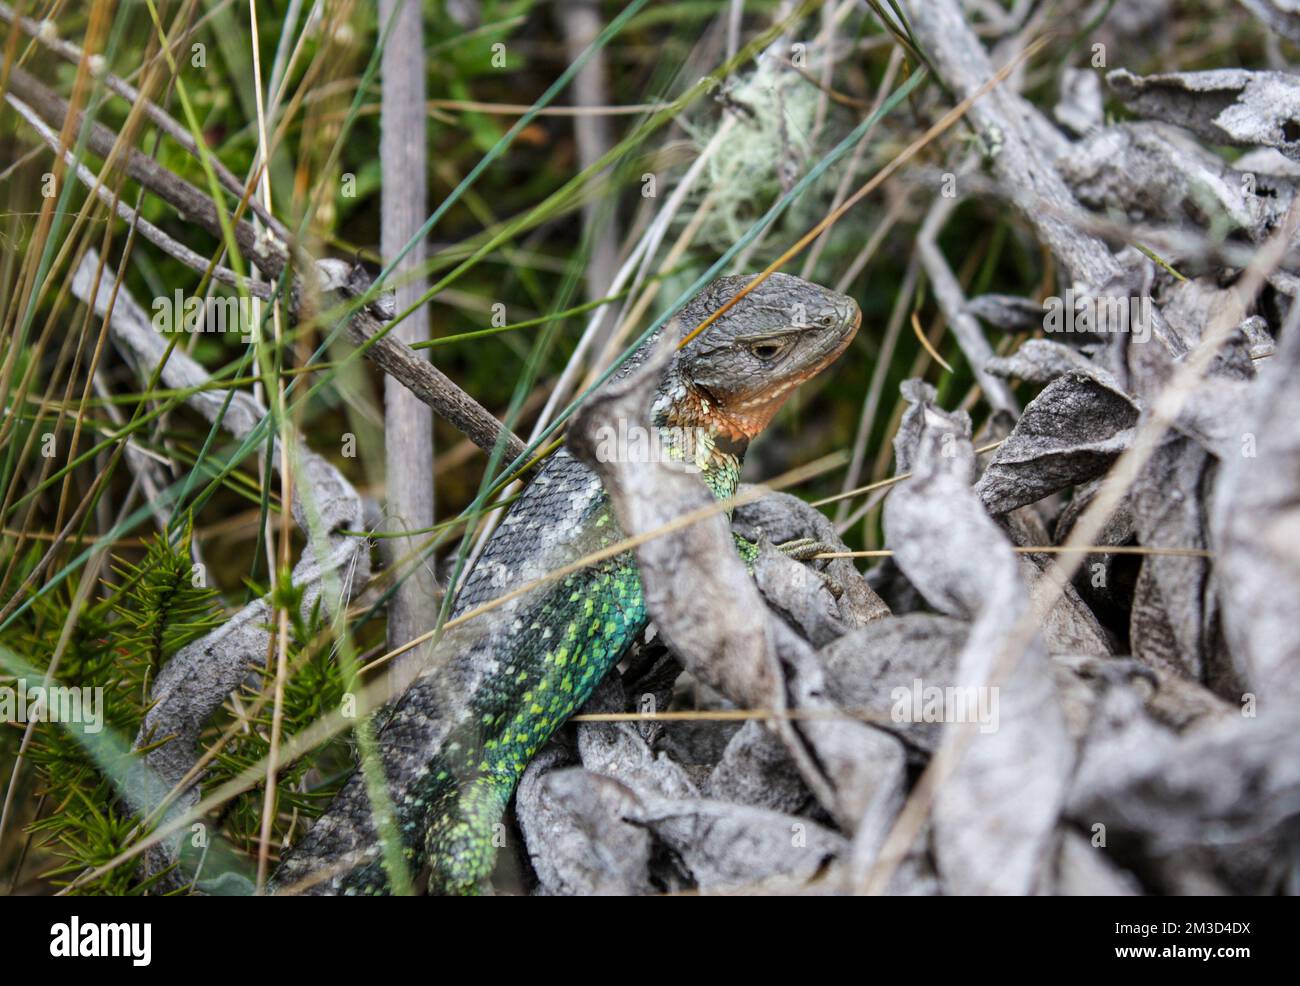 Close up to Multicolor Lizard (Stenocercus cf trachycephalus) over grass in Sumapaz Paramo near to Bogot, Colombia. Stock Photo